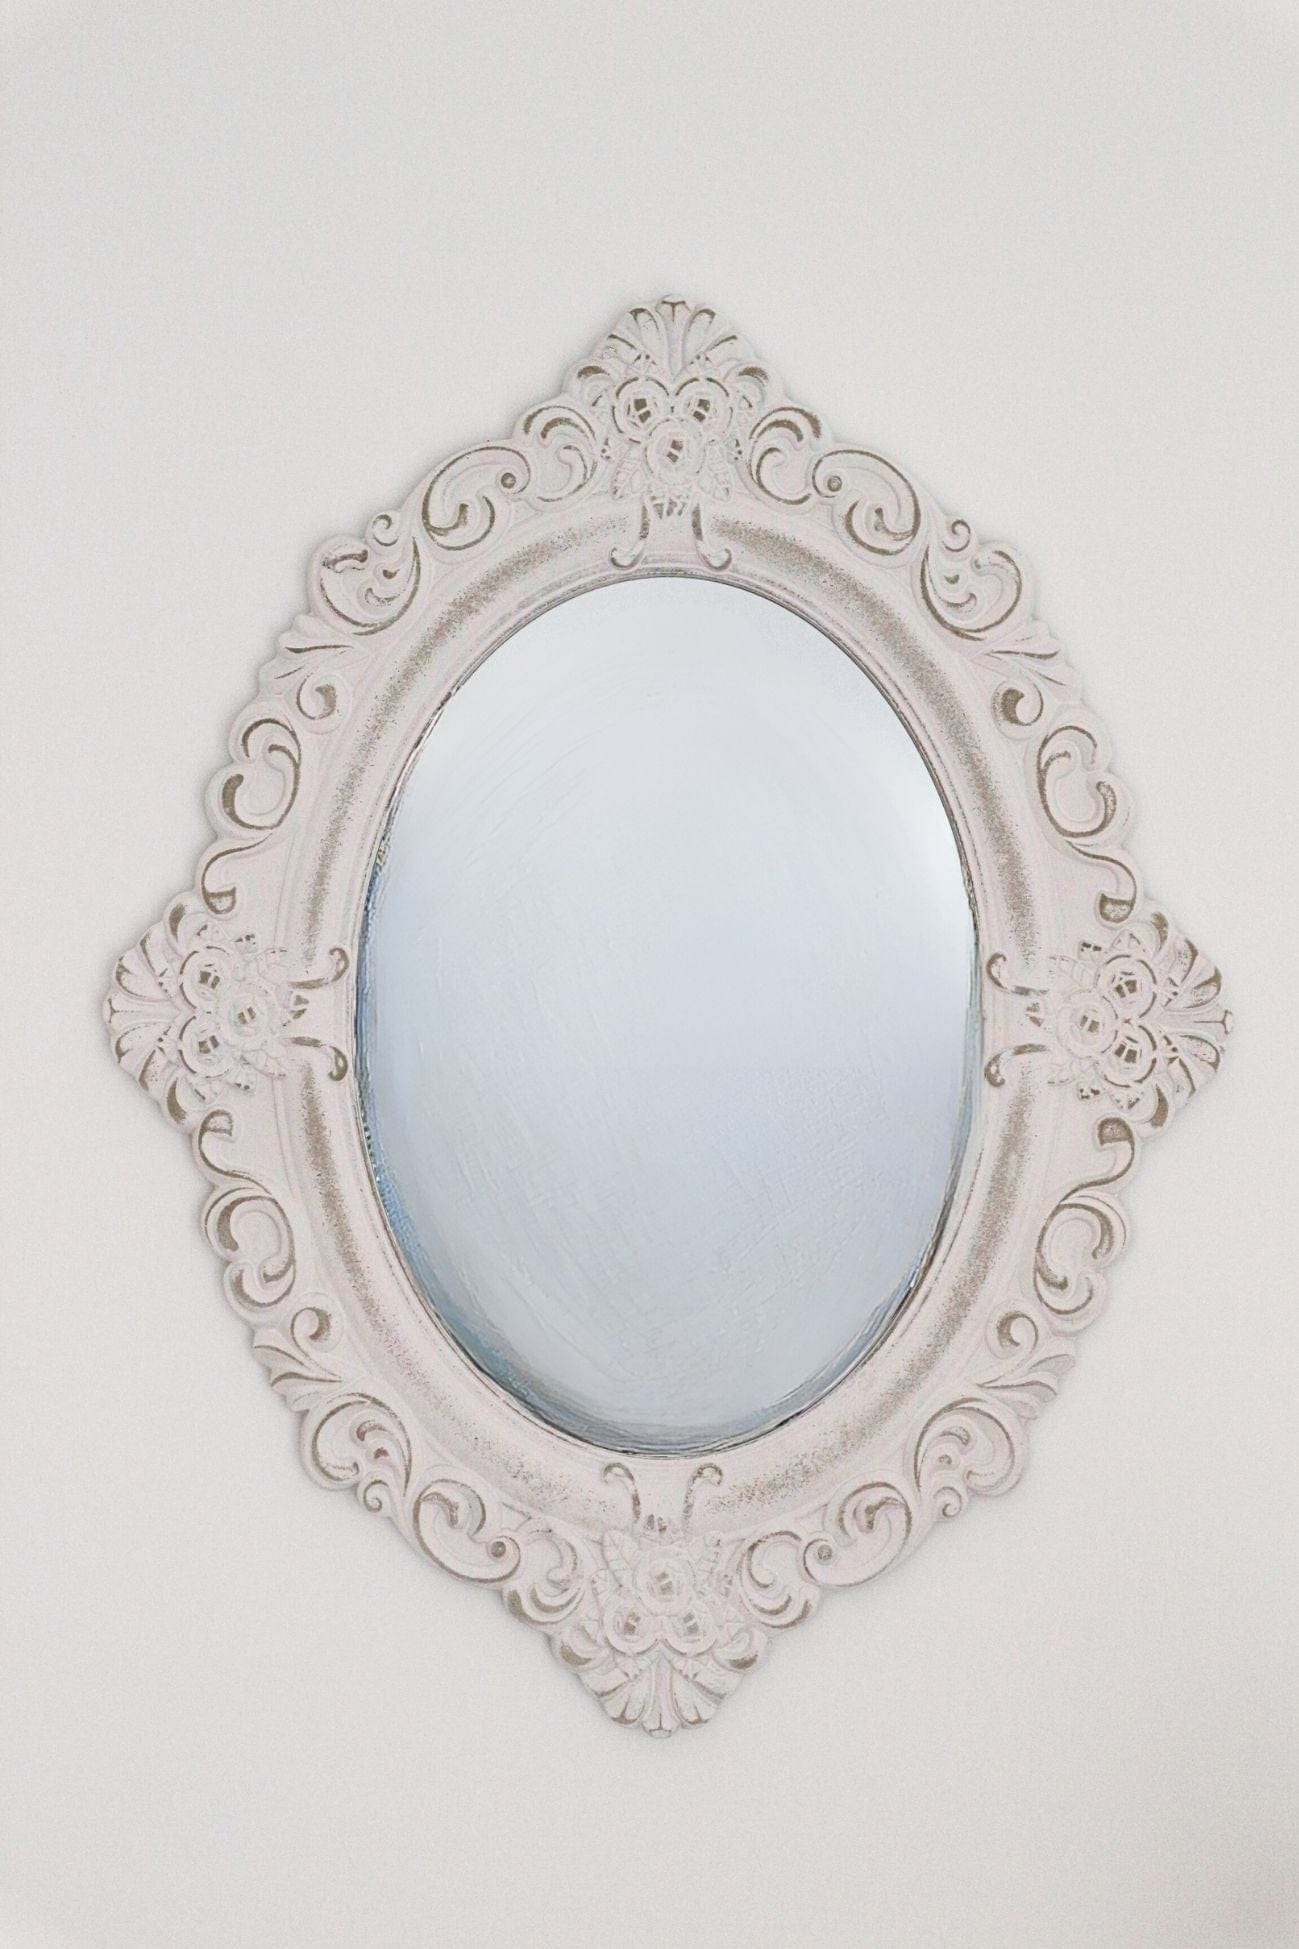 Item International Providence Providence - Specchio shabby chic in legno finto rovinato | Item International